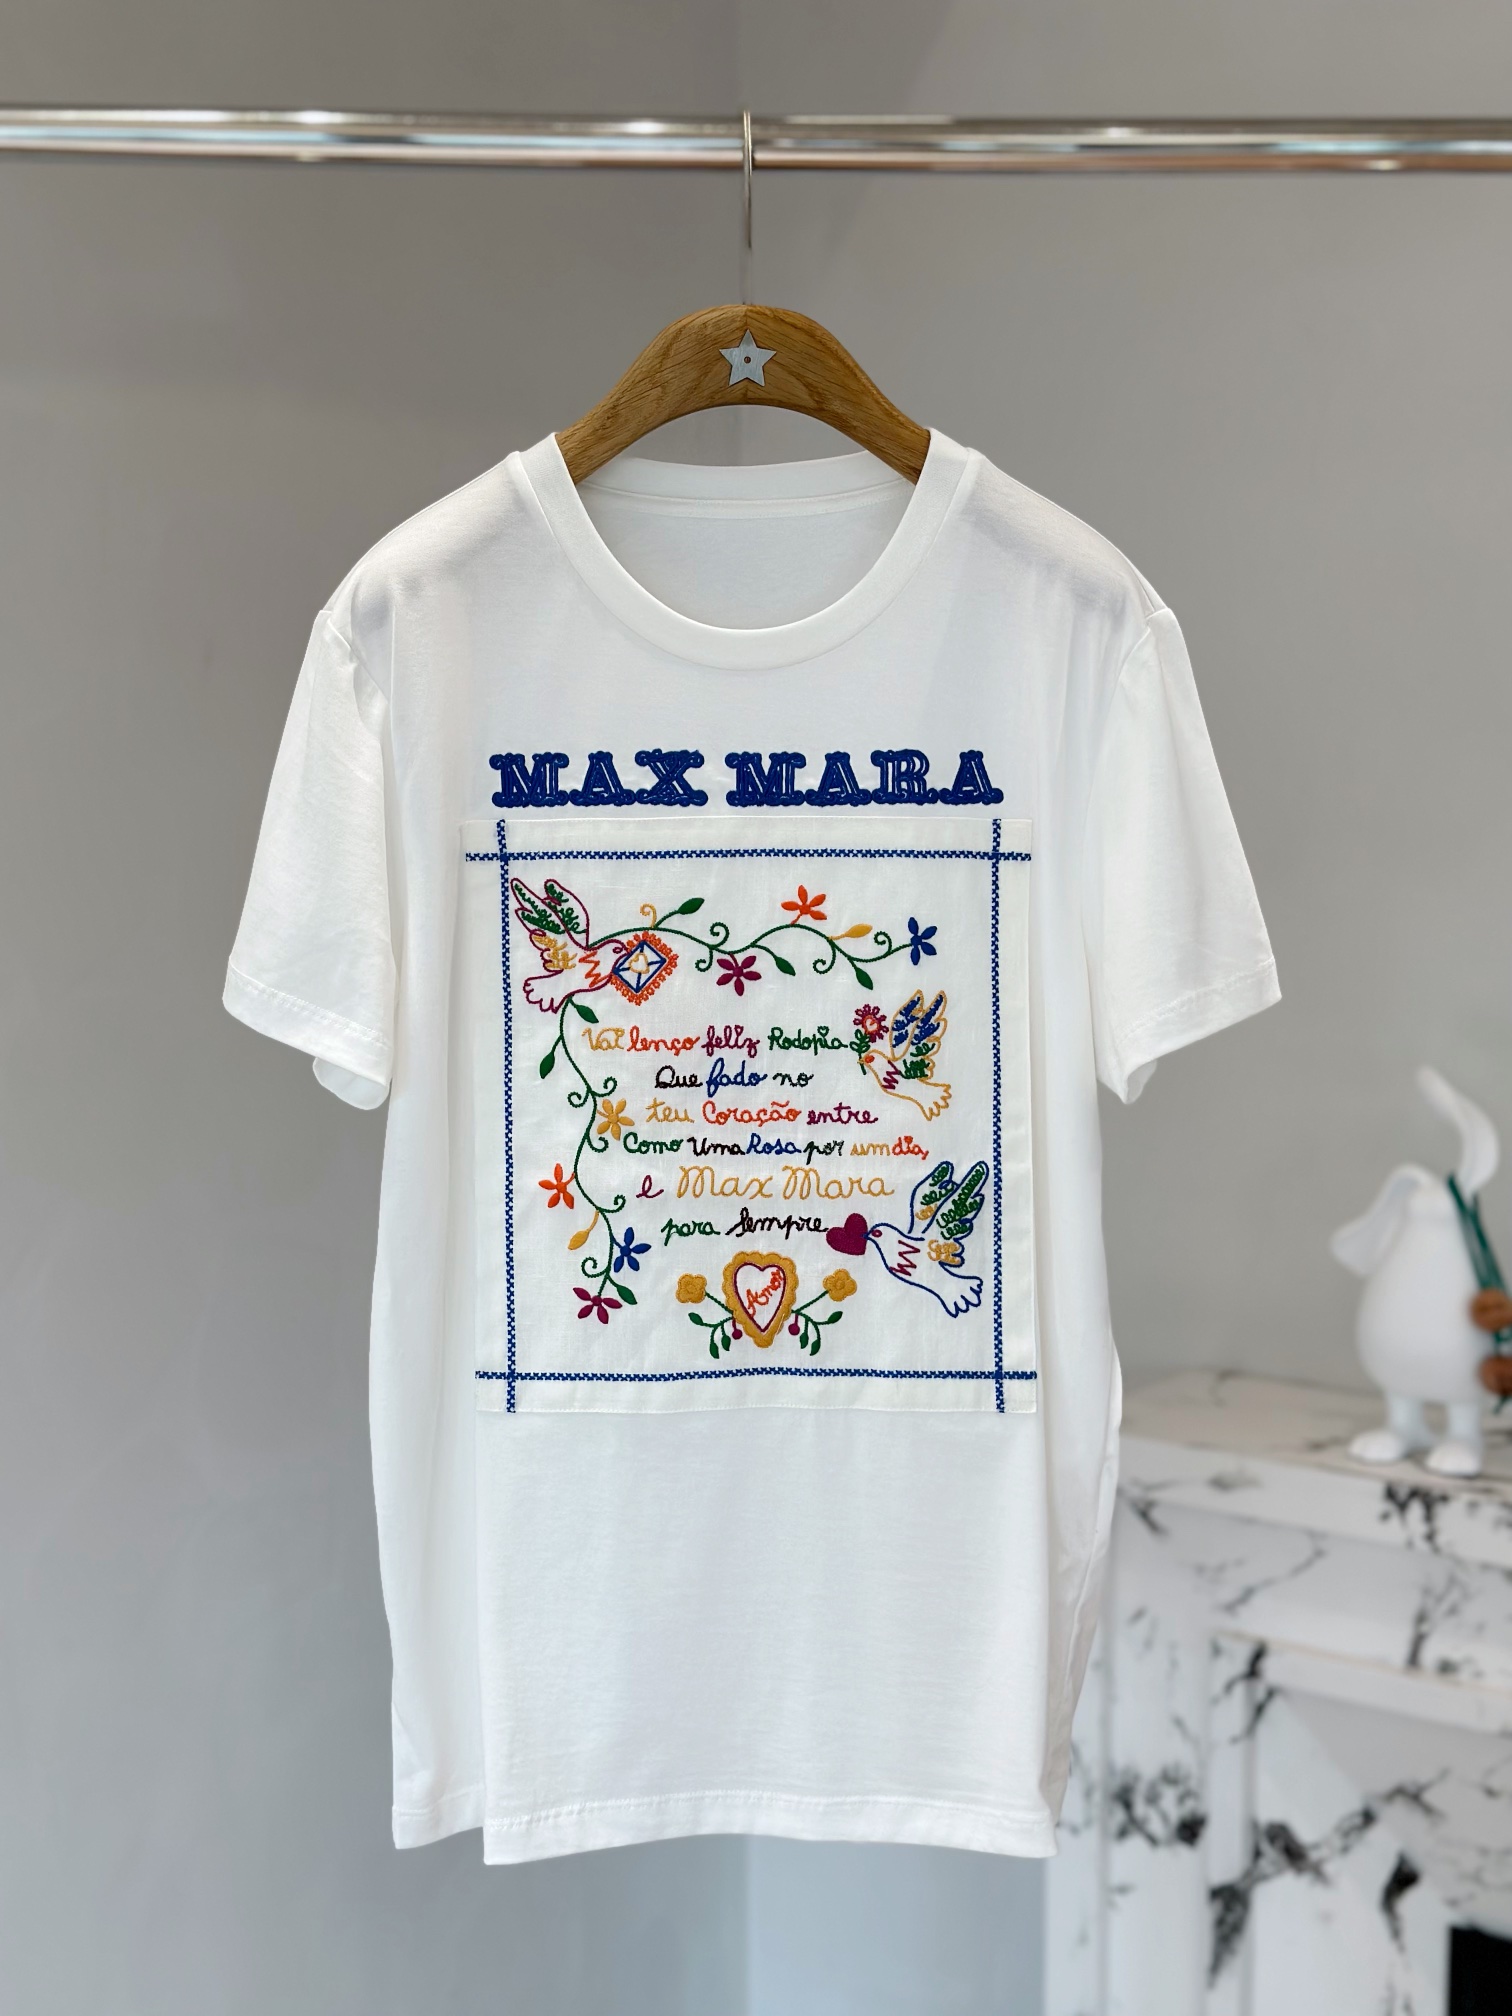 Pezdjs:Maxmara幸福手帕T恤 幸福寄语设计灵感来自葡萄牙Minho地区的文化传统称为“爱的手帕”Size:XS S M L